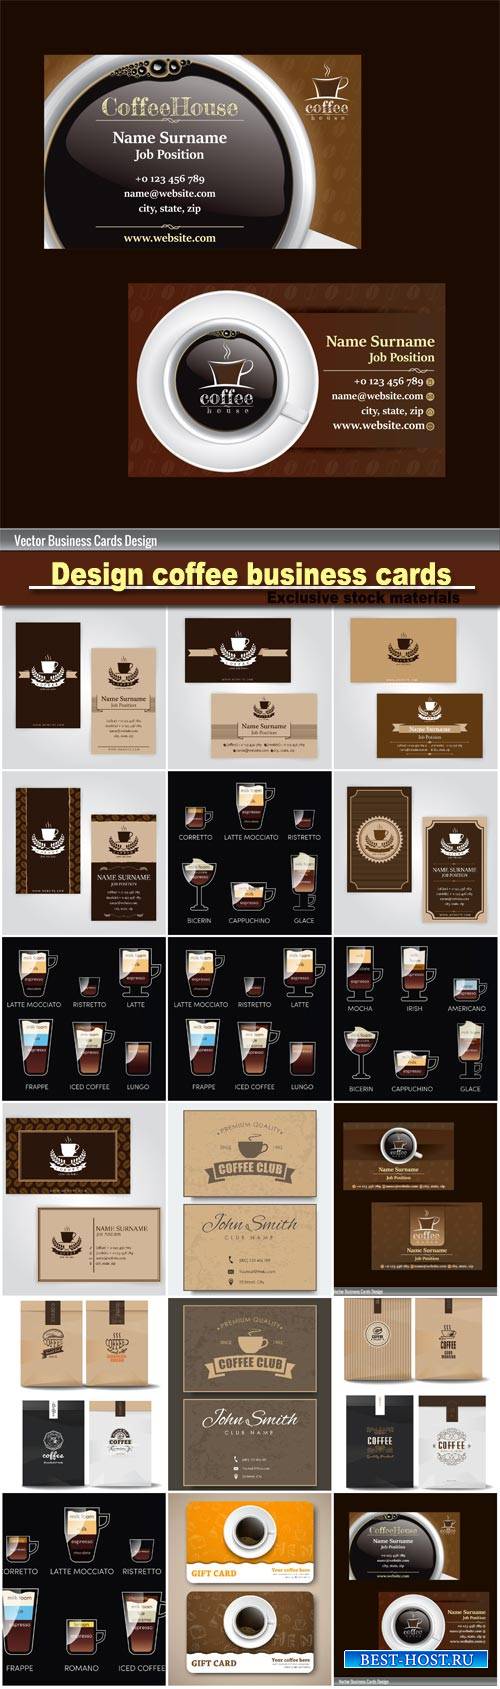 Design coffee business cards, coffee badge logo